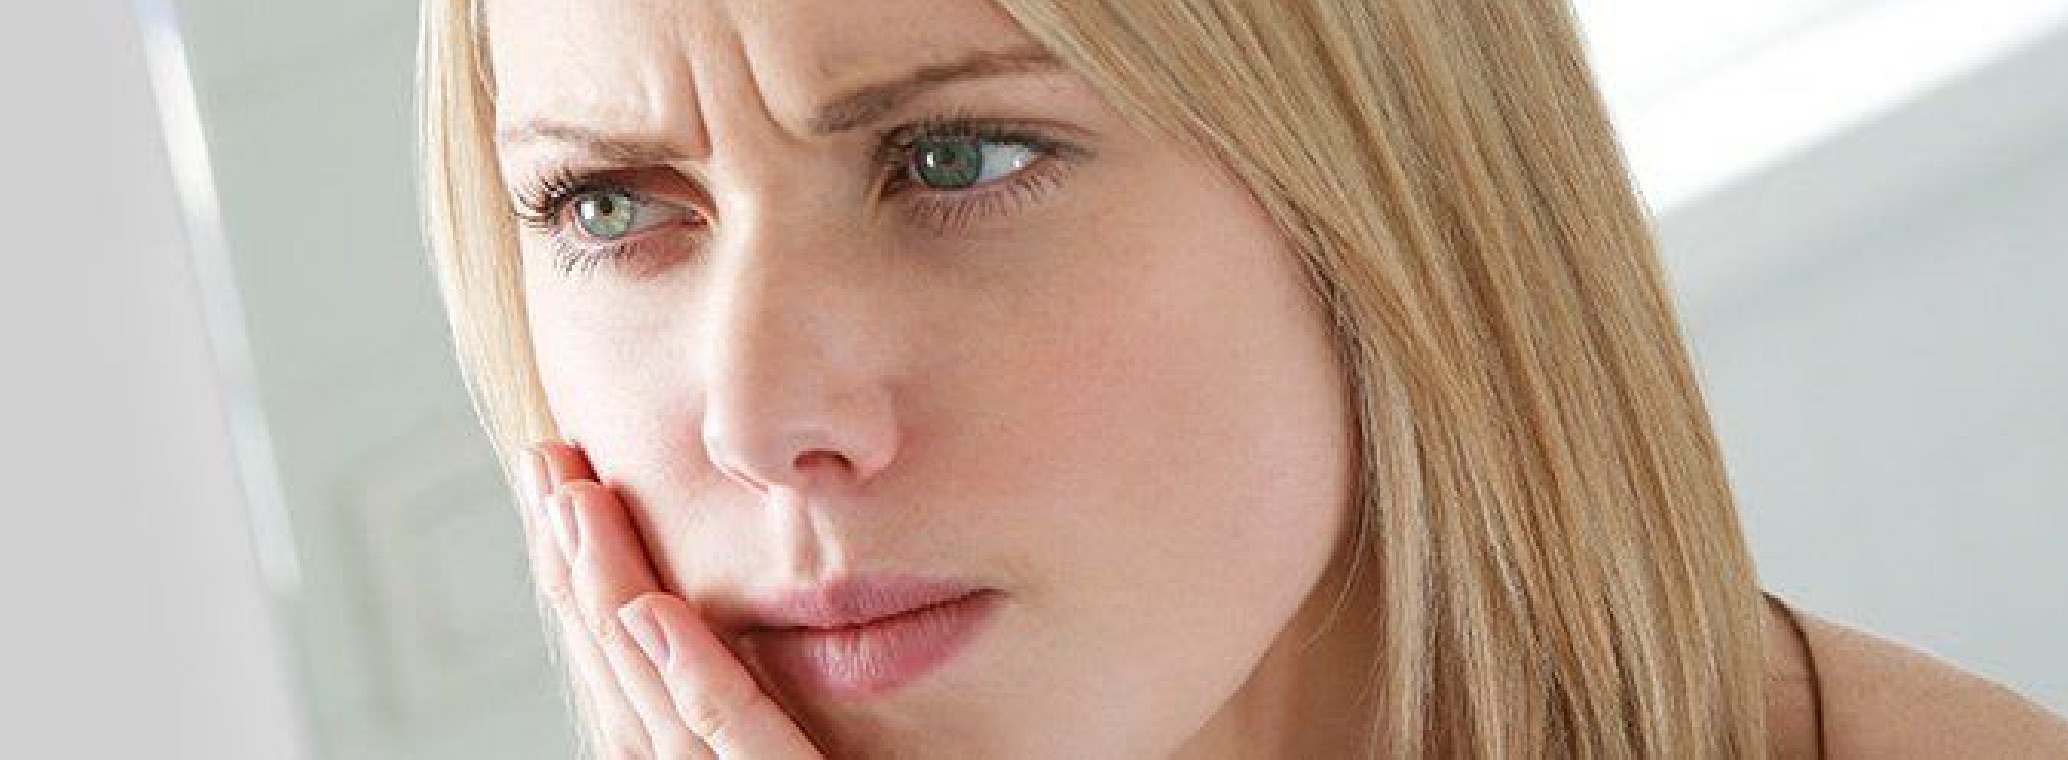 Teeth Whitening Sensitivity Causes